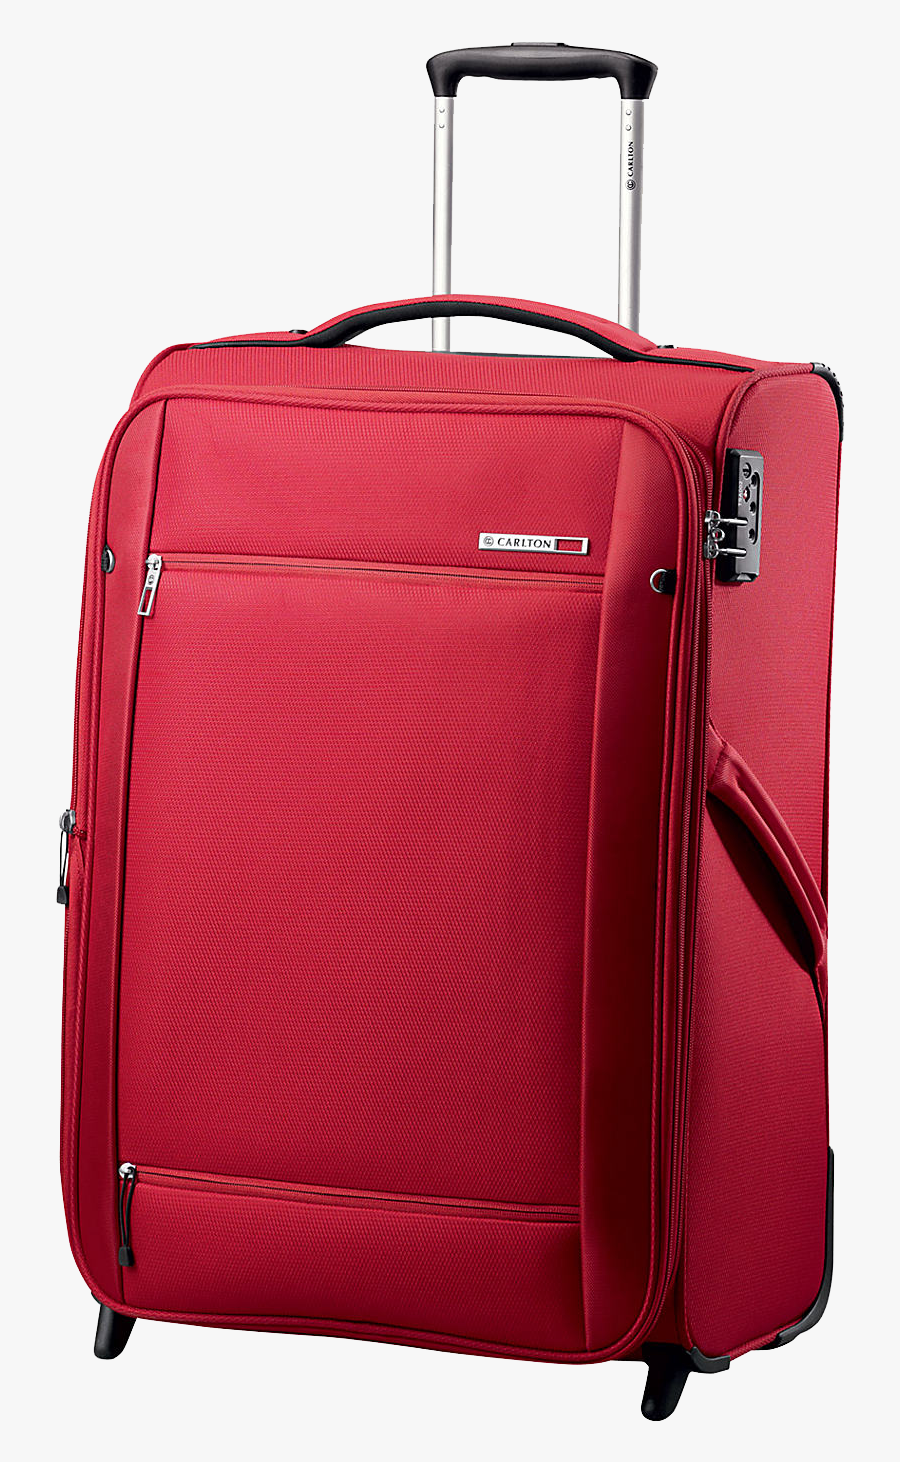 Suitcase Transparent - Traveller Bag Png, Transparent Clipart